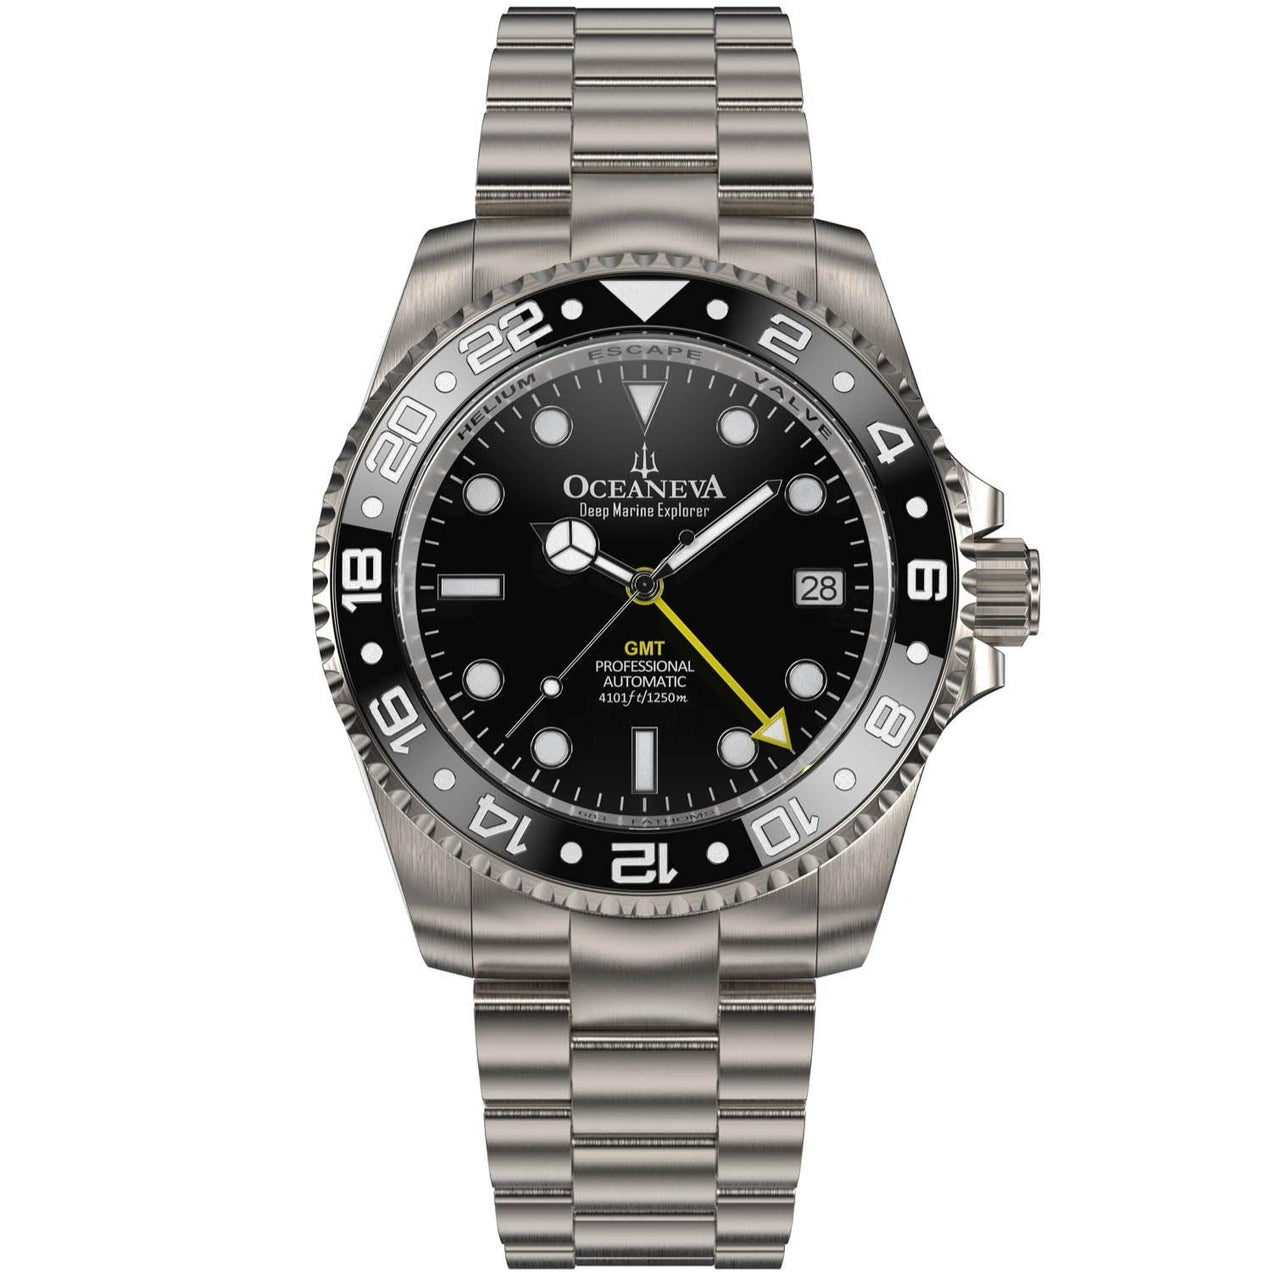 Elegant Oceaneva Titanium Watch with sleek black ceramic bezel